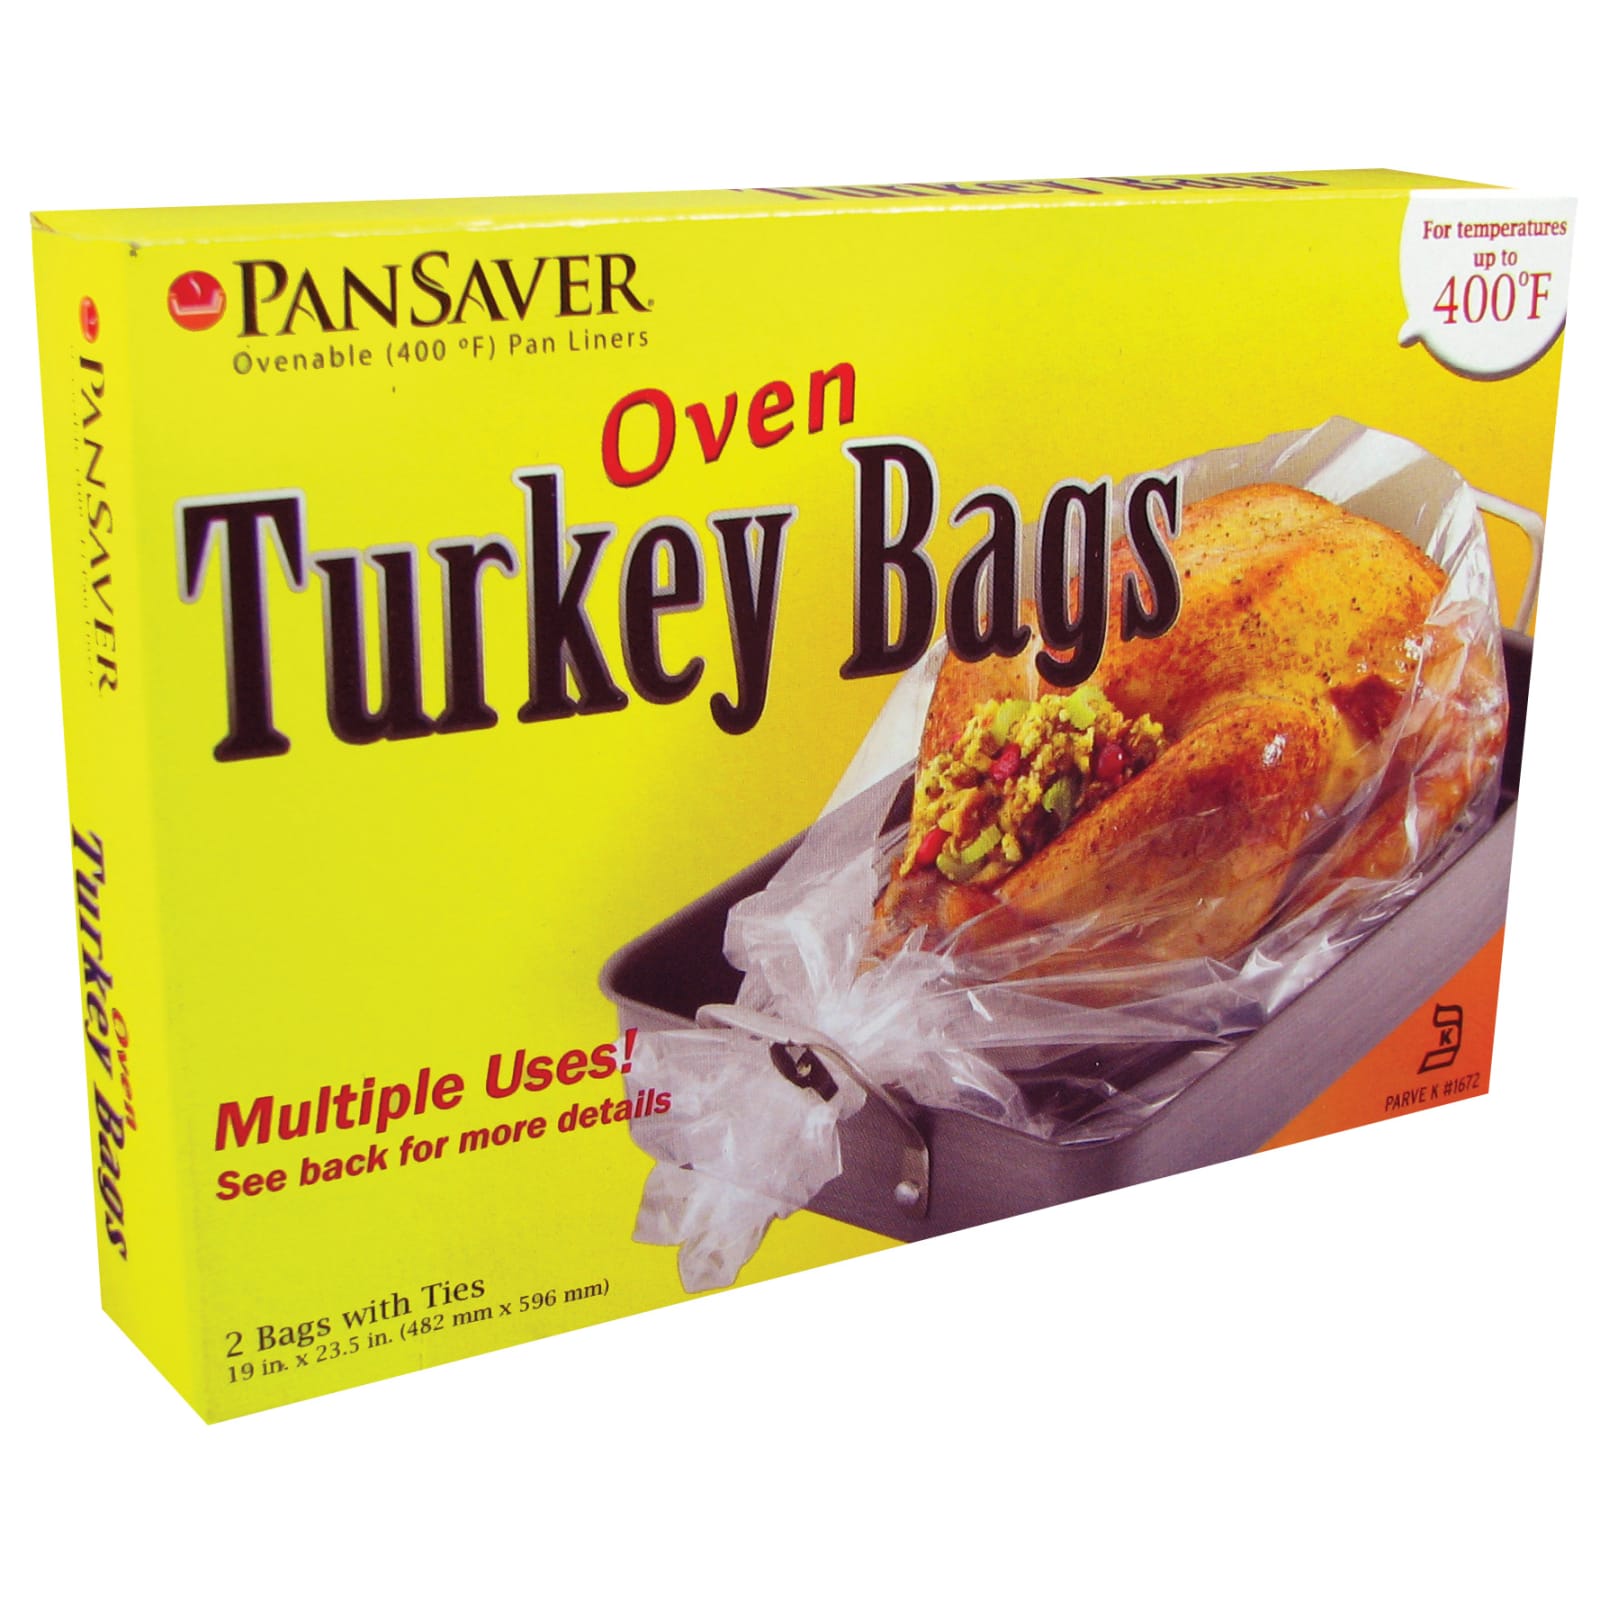 PanSaver 19 in x 23.5 in Turkey Oven Bags - 2 Pk by PanSaver at Fleet Farm